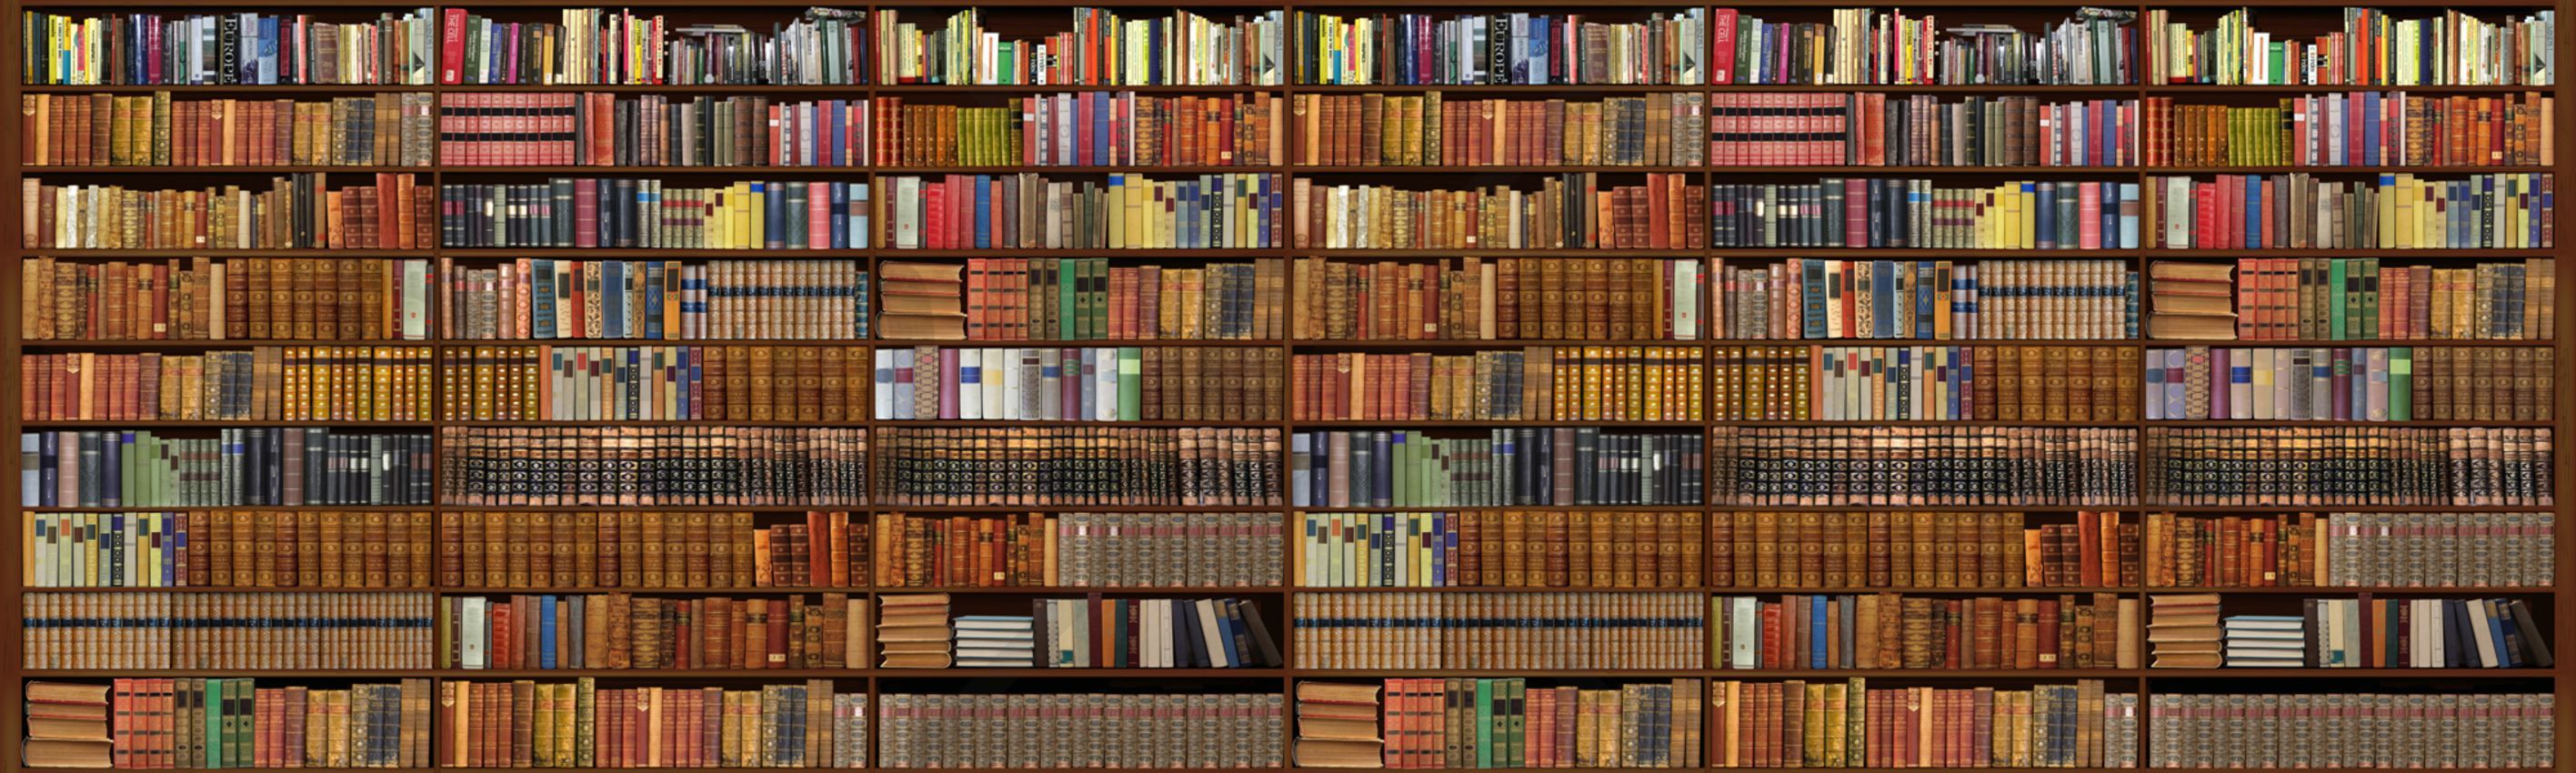 Bookshelf Wallpapers 4k Hd Bookshelf Backgrounds On Wallpaperbat